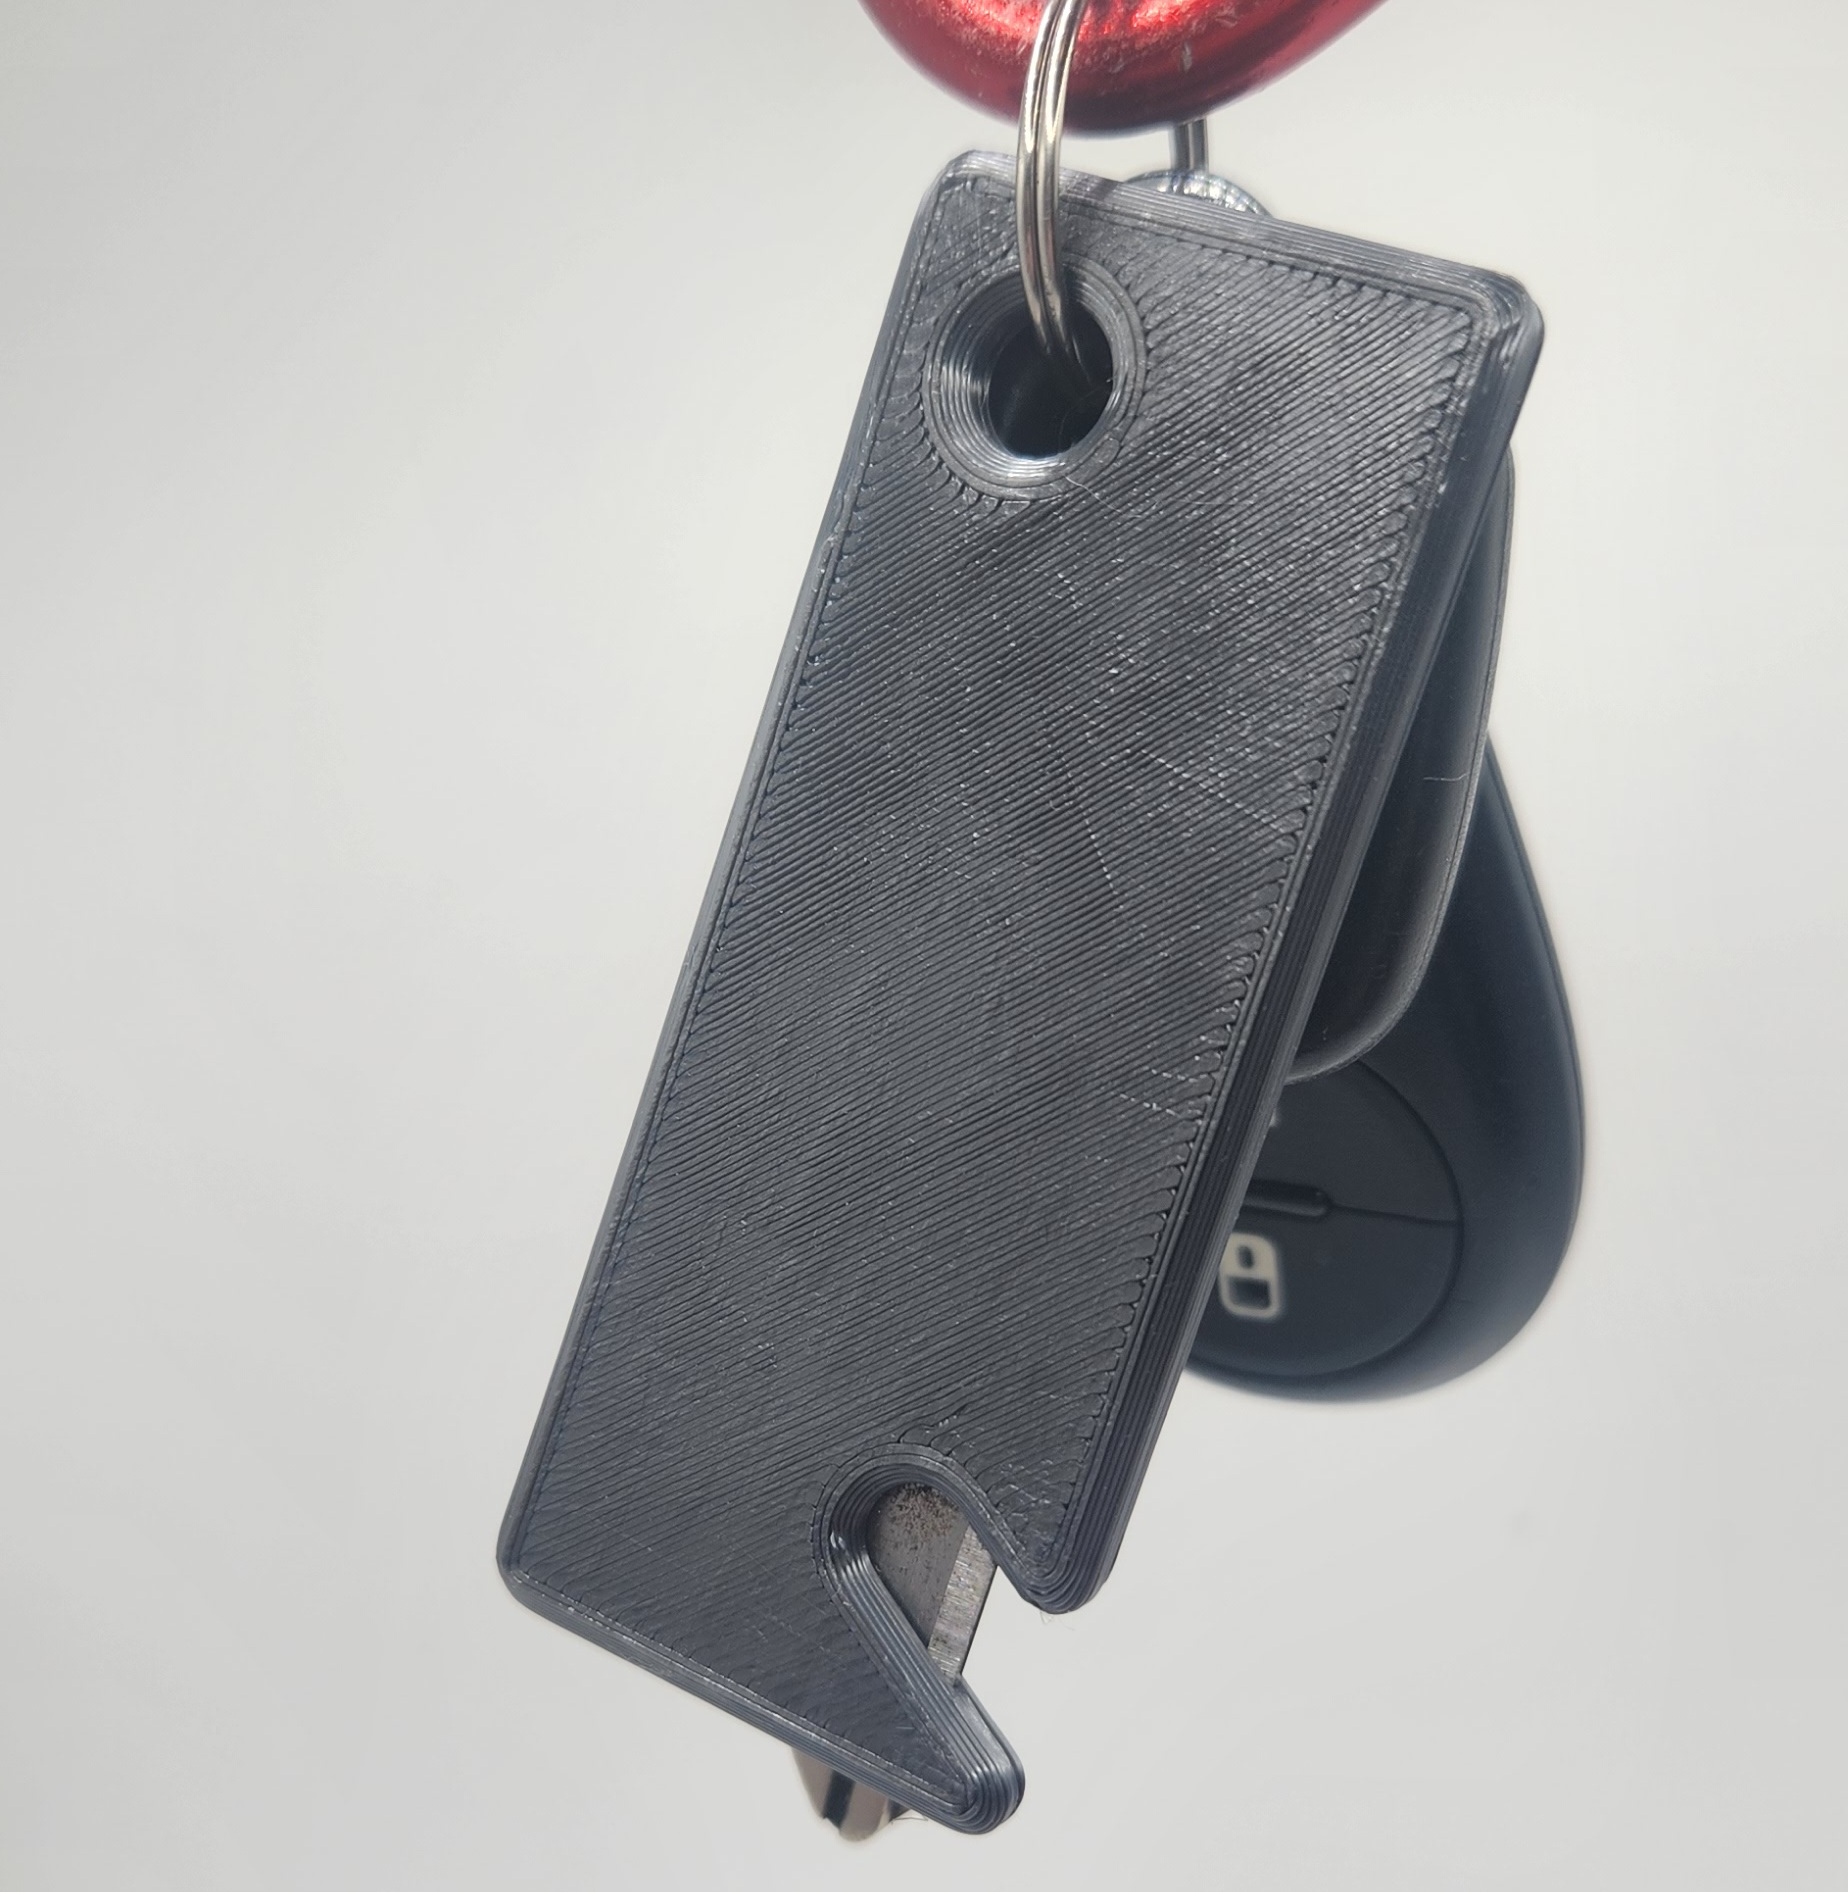 Keychain Seatbelt Cutter